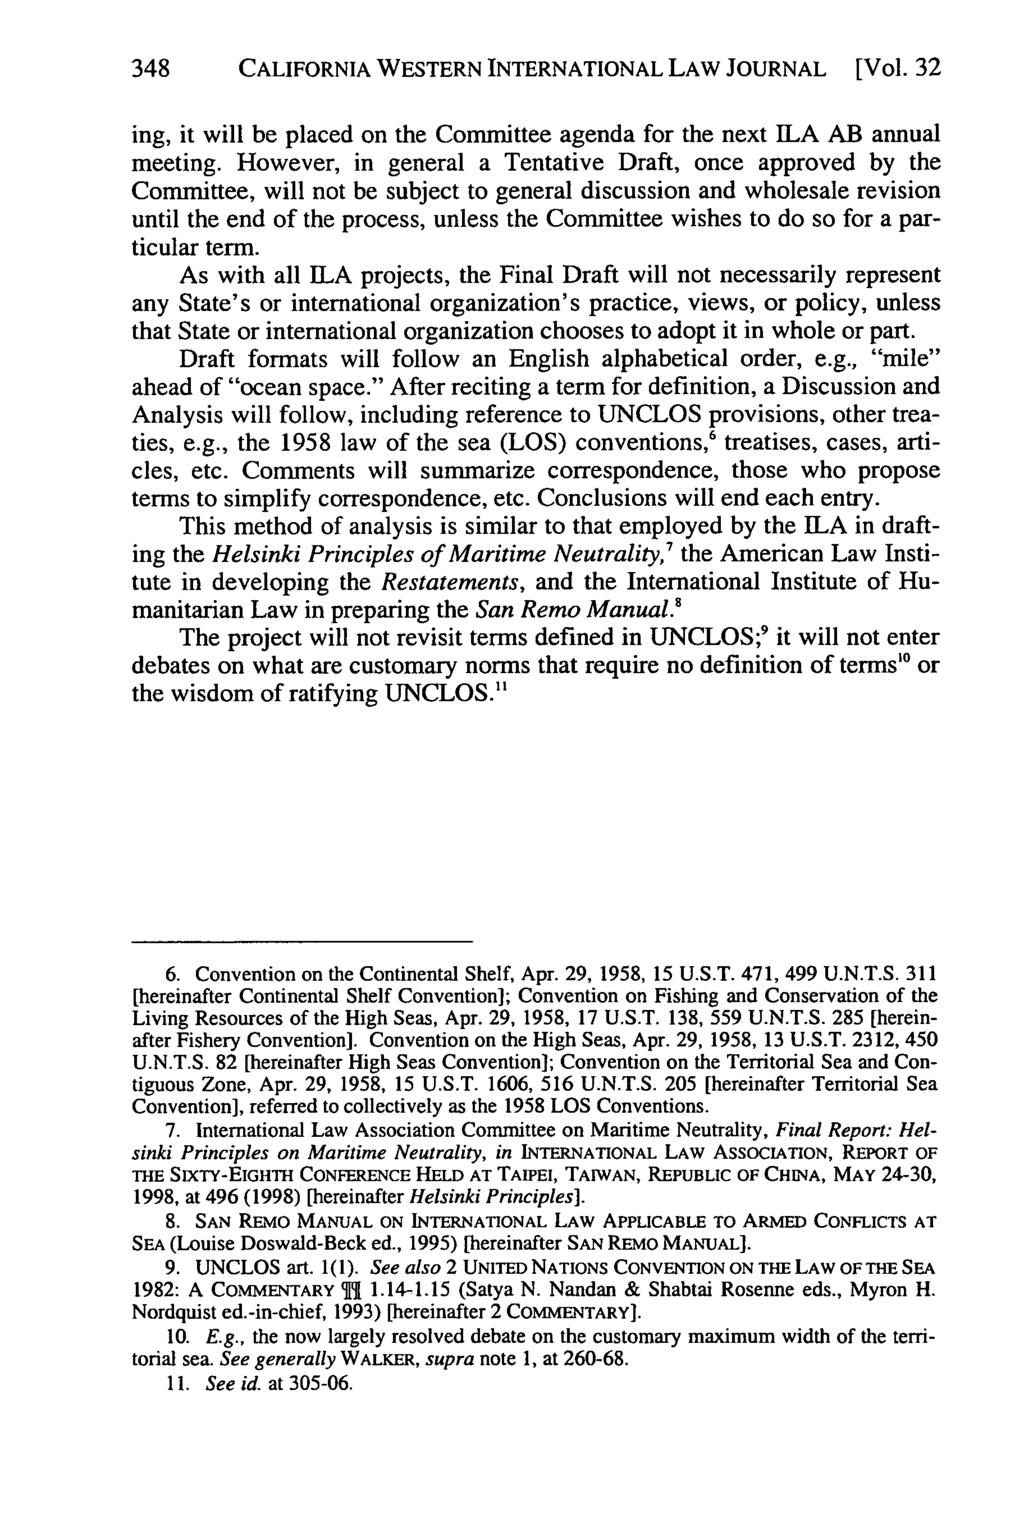 348 California Western International Law Journal, Vol. 32 [2001], No. 2, Art. 6 CALIFORNIA WESTERN INTERNATIONAL LAW JOURNAL [Vol.